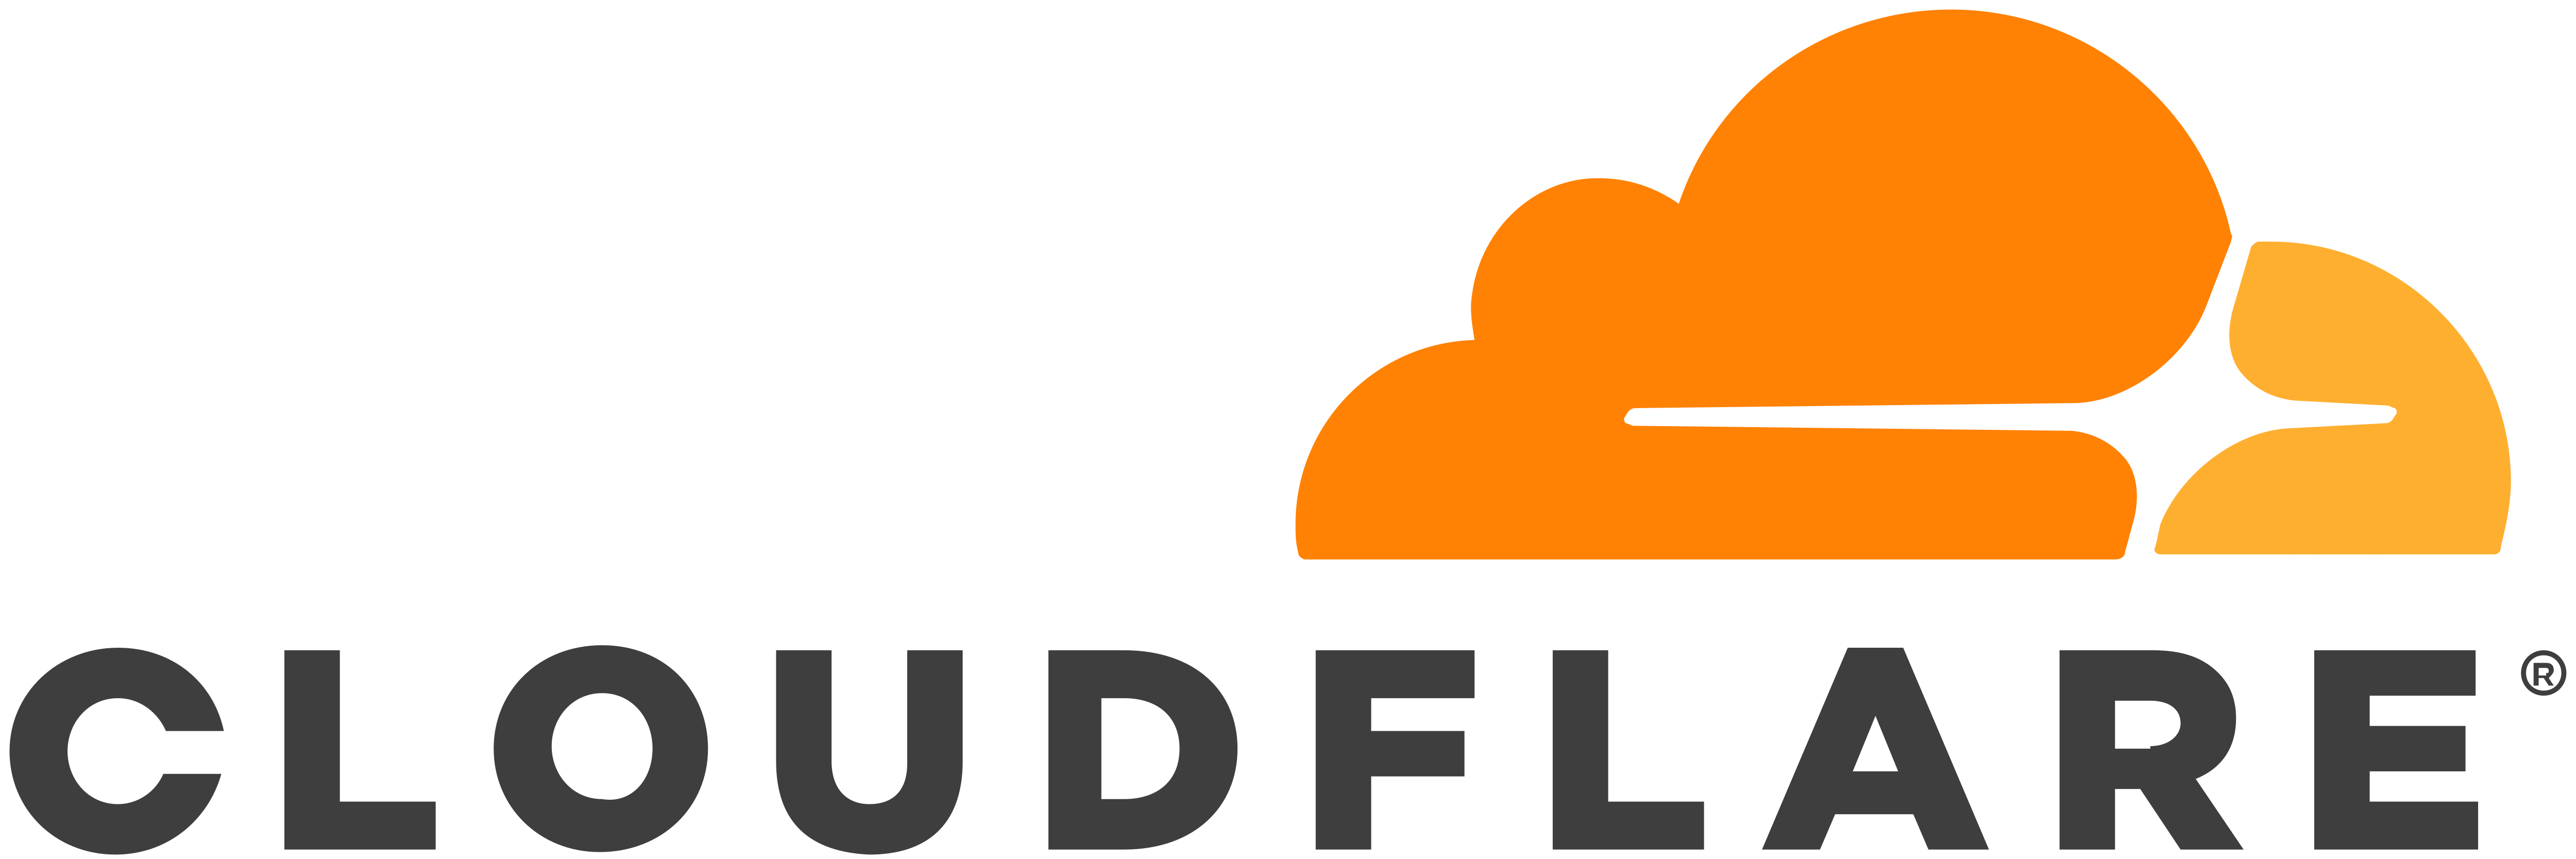 Cloudflare Inc.